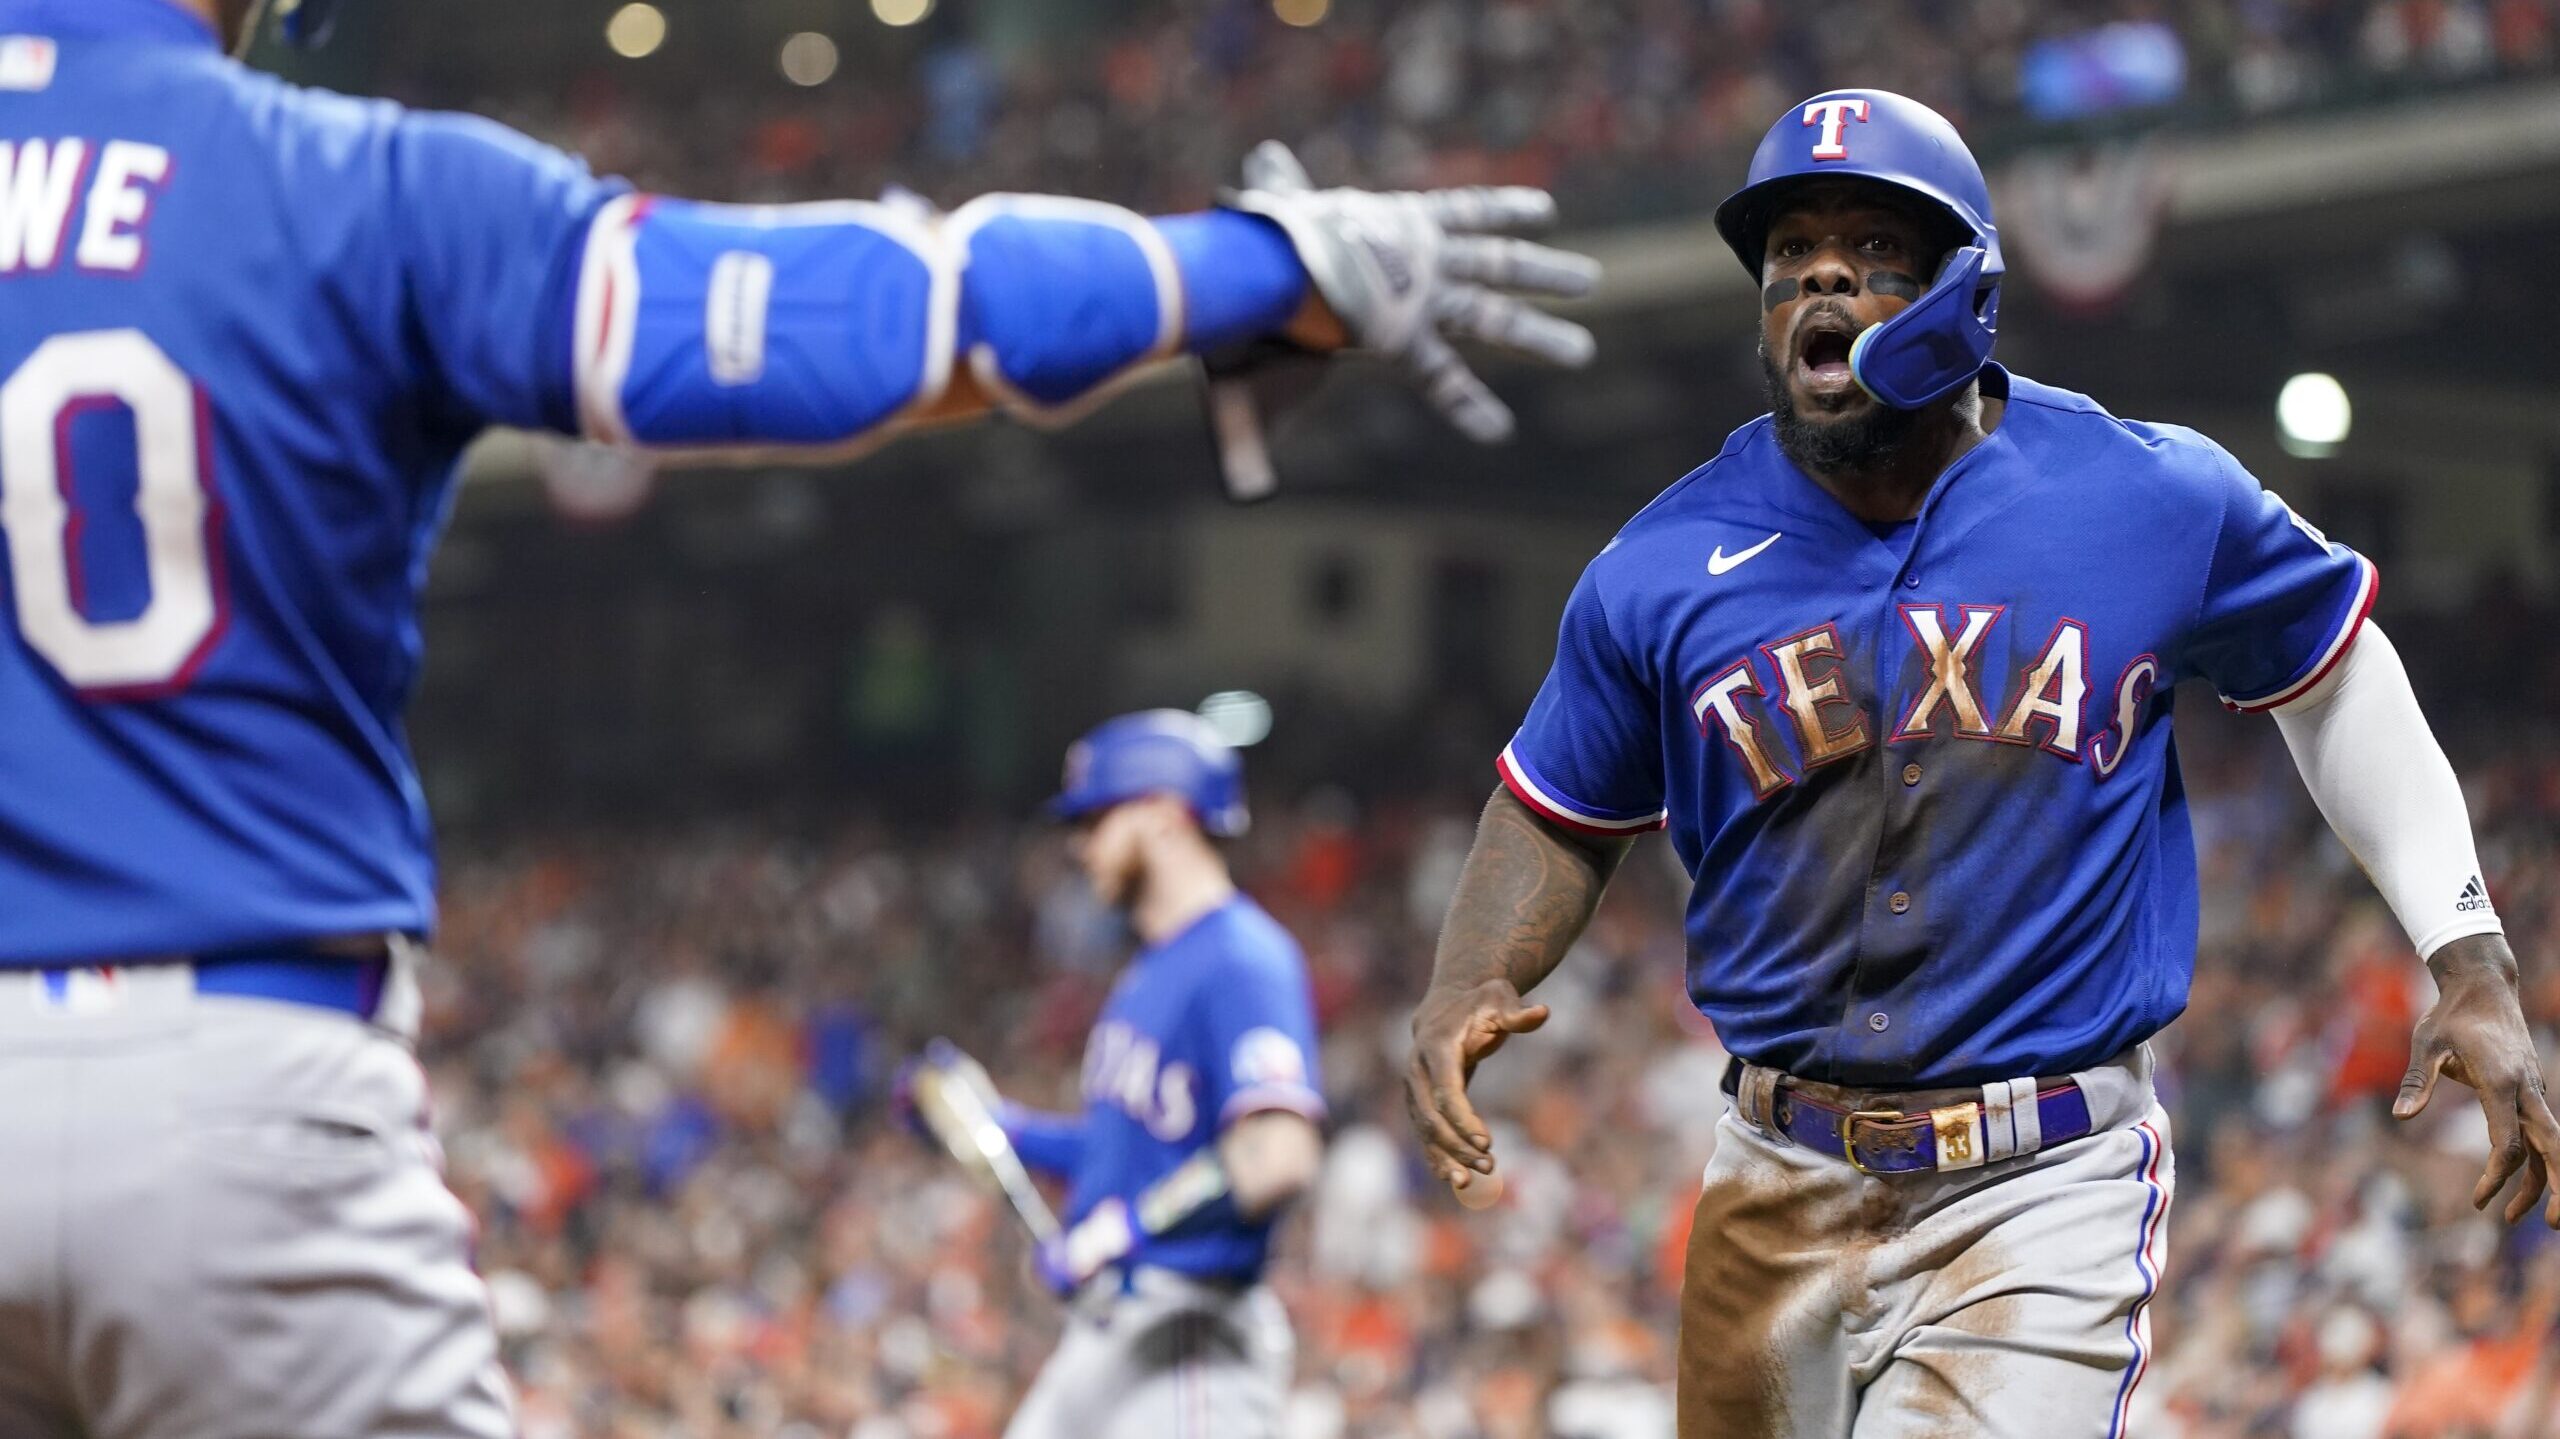 Top 4 all-time Texas Rangers Home Run Derby performances